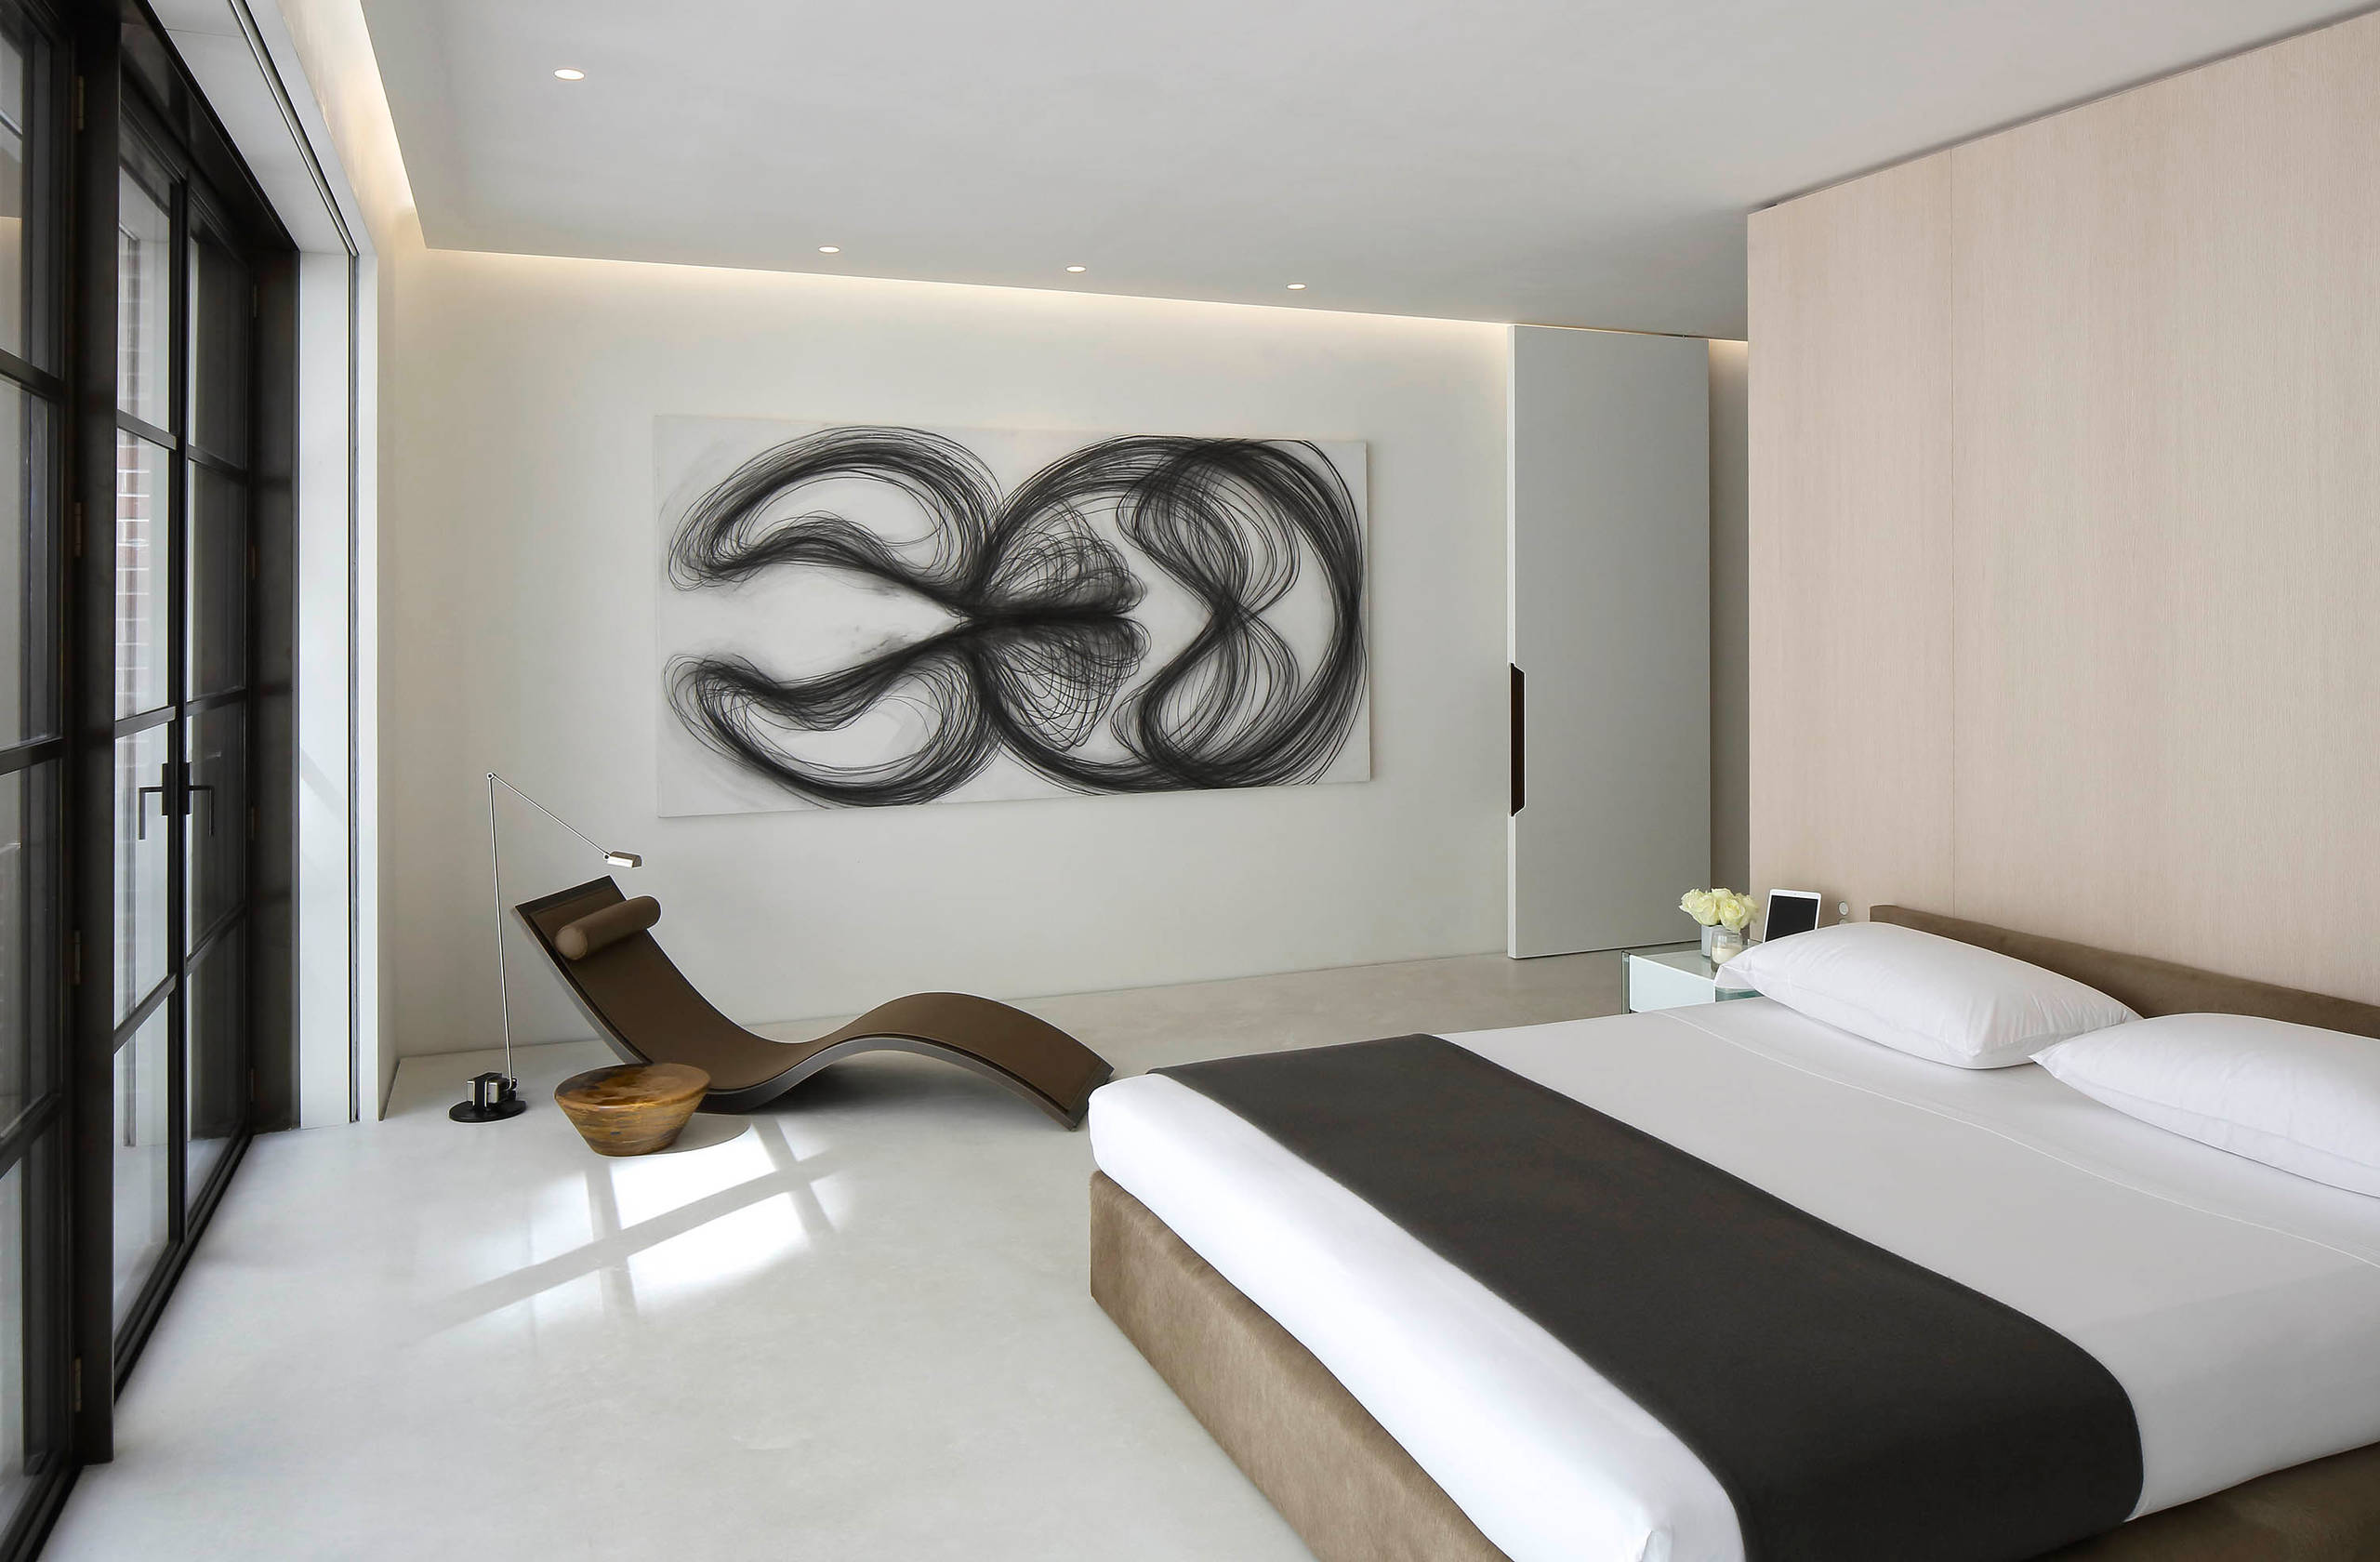 Bedroom Design Art: A Touch Of Elegance